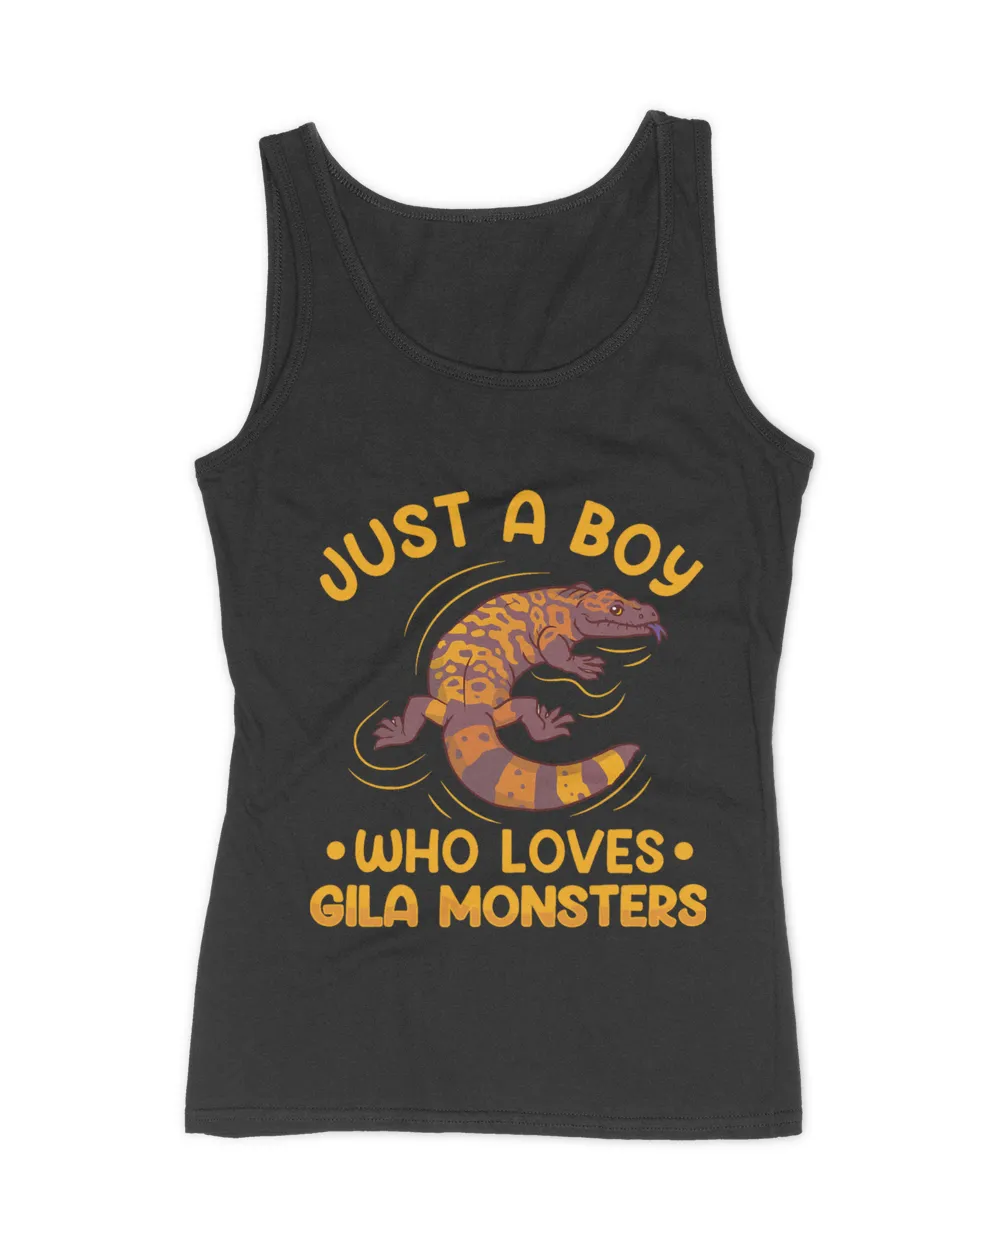 Gila Monster Design for a Gila Monster Boy